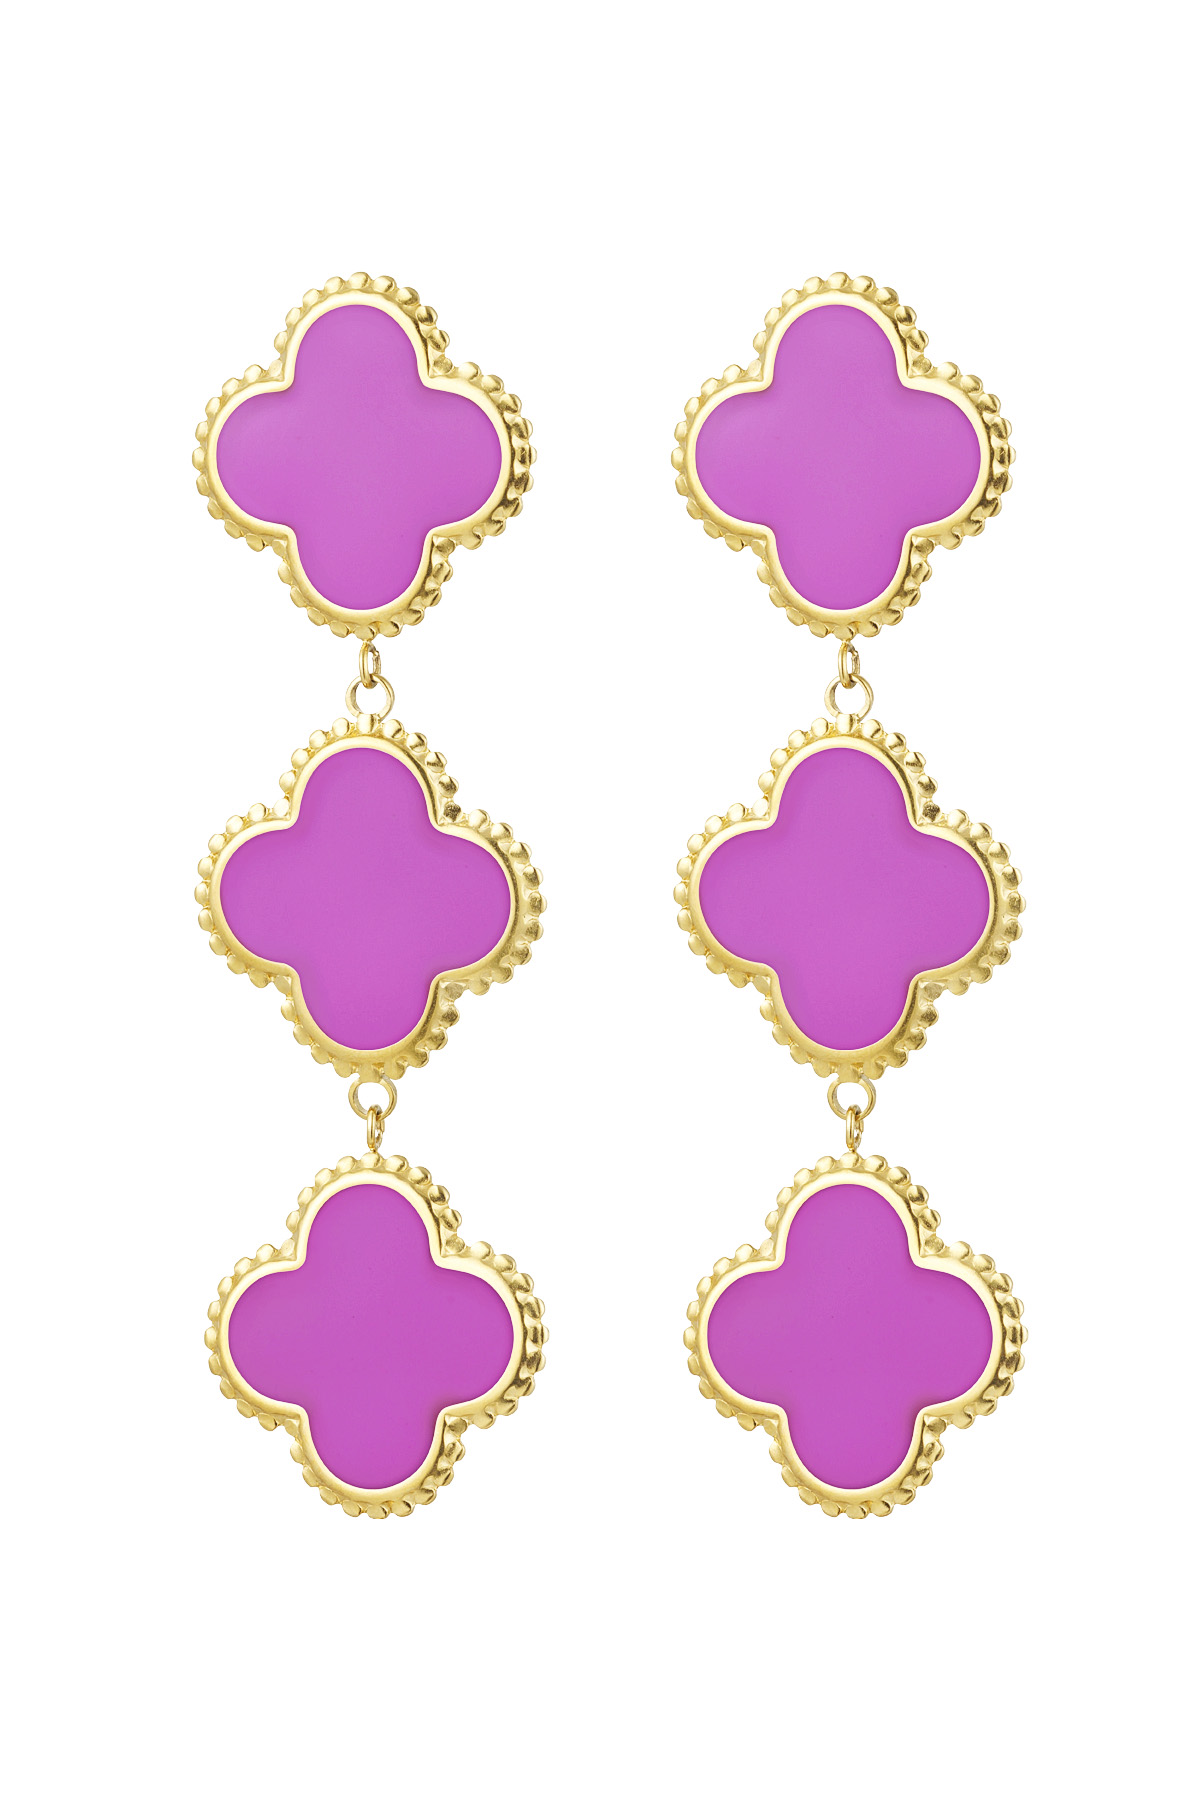 Earrings 3 clovers - purple Stainless Steel h5 